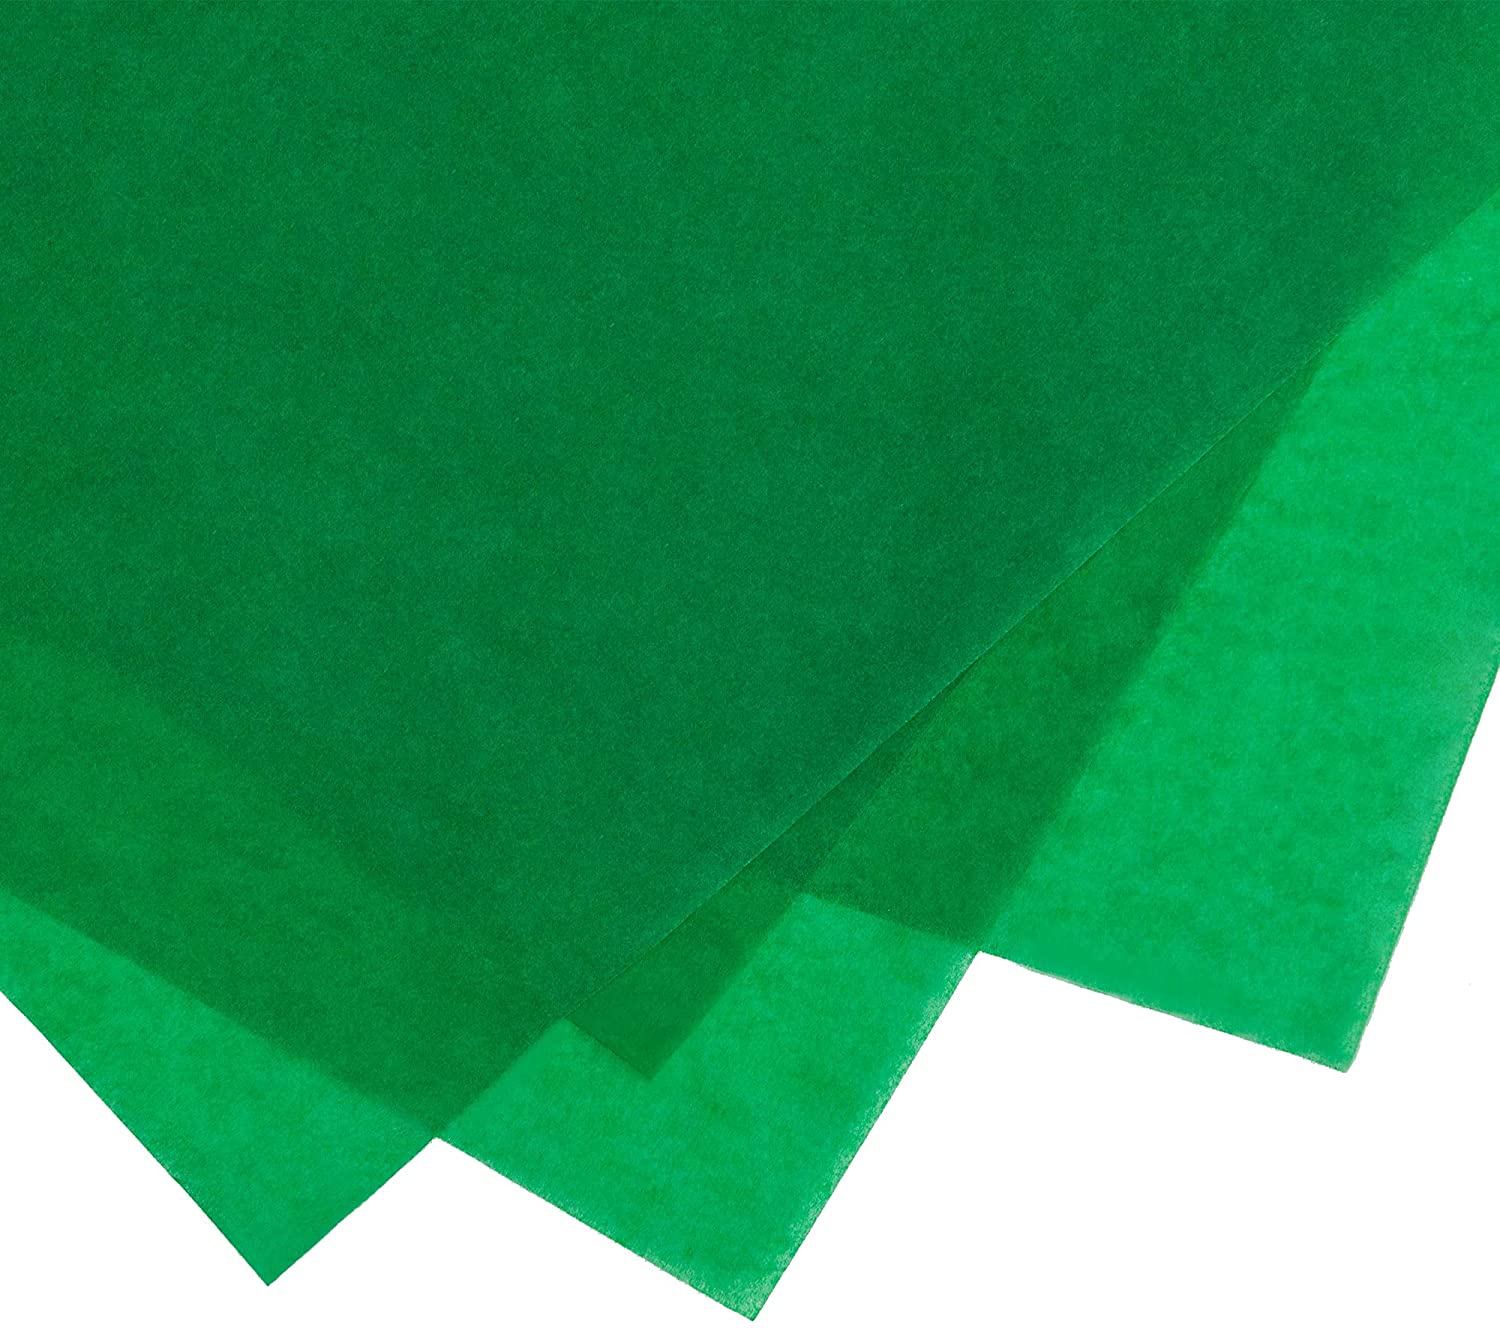 50 Sheets Dark Green Tissue Paper Bulk,29.5x 19.6,Green Tissue Paper for  Gift Bags,Gift Wrapping Tissue Paper,Crafts and DIY,Gift Tissue Paper for  Easter St. Patrick's Day Christmas Holiday - 